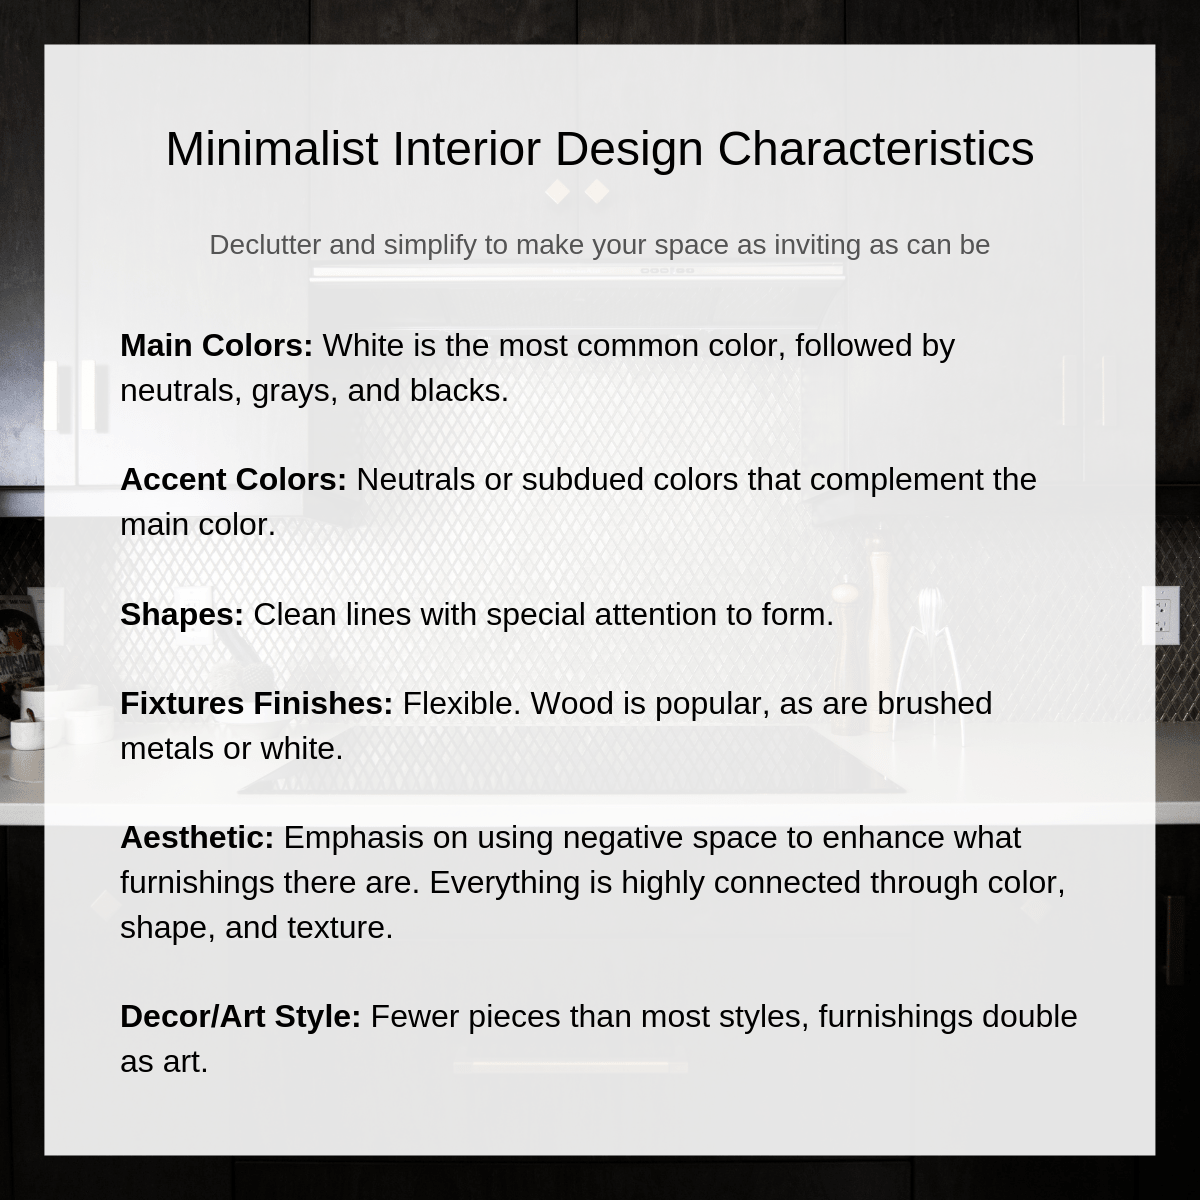 Minimalist interior design characteristics